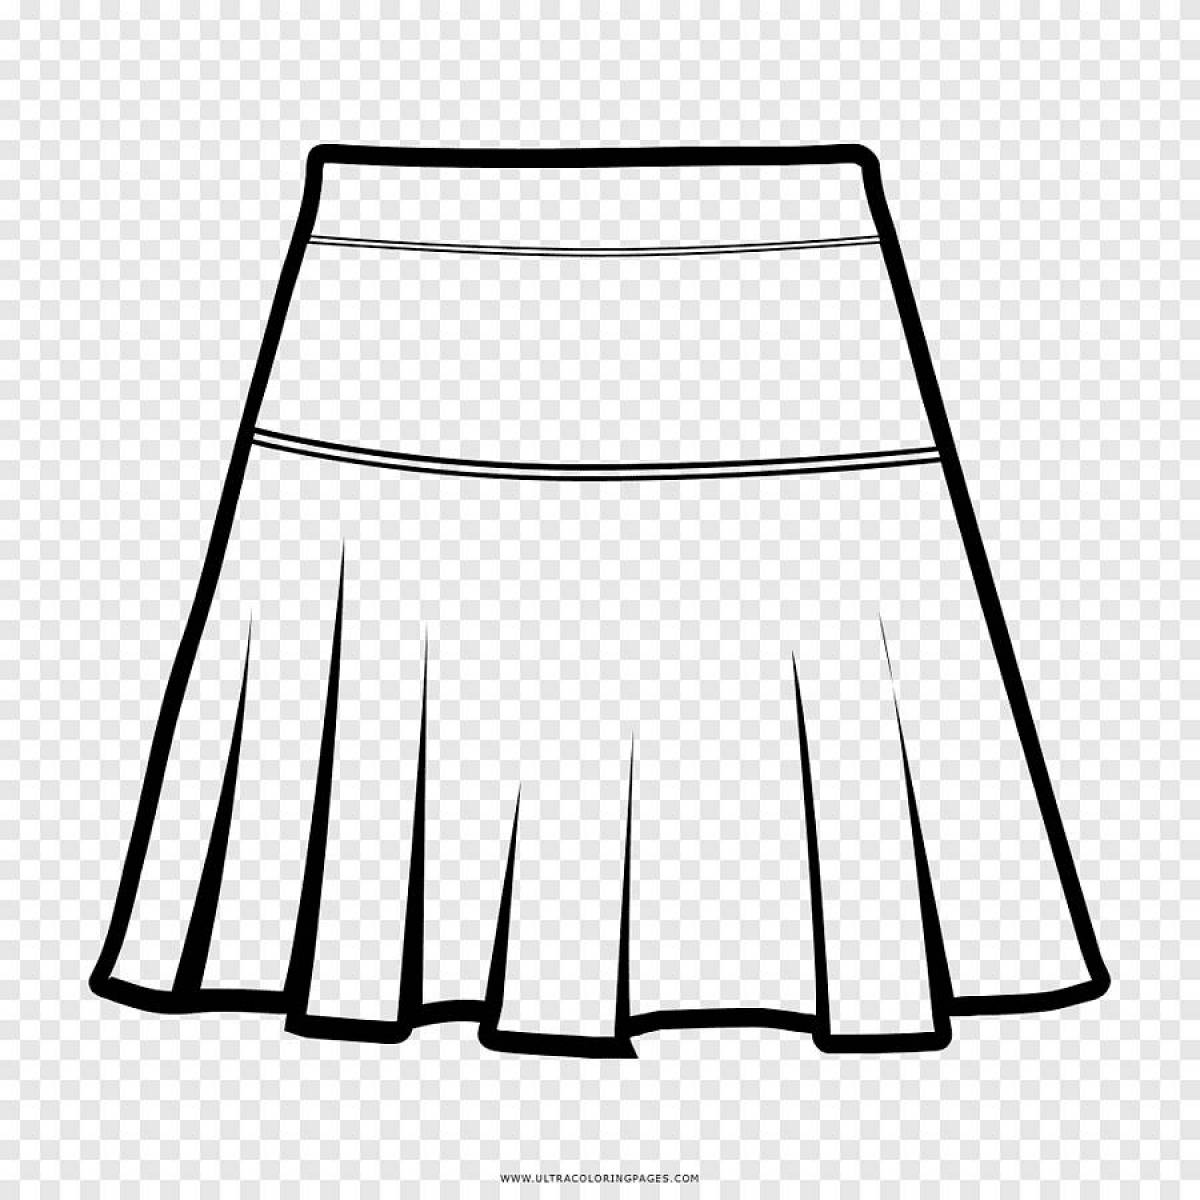 Coloring page joyful skirt